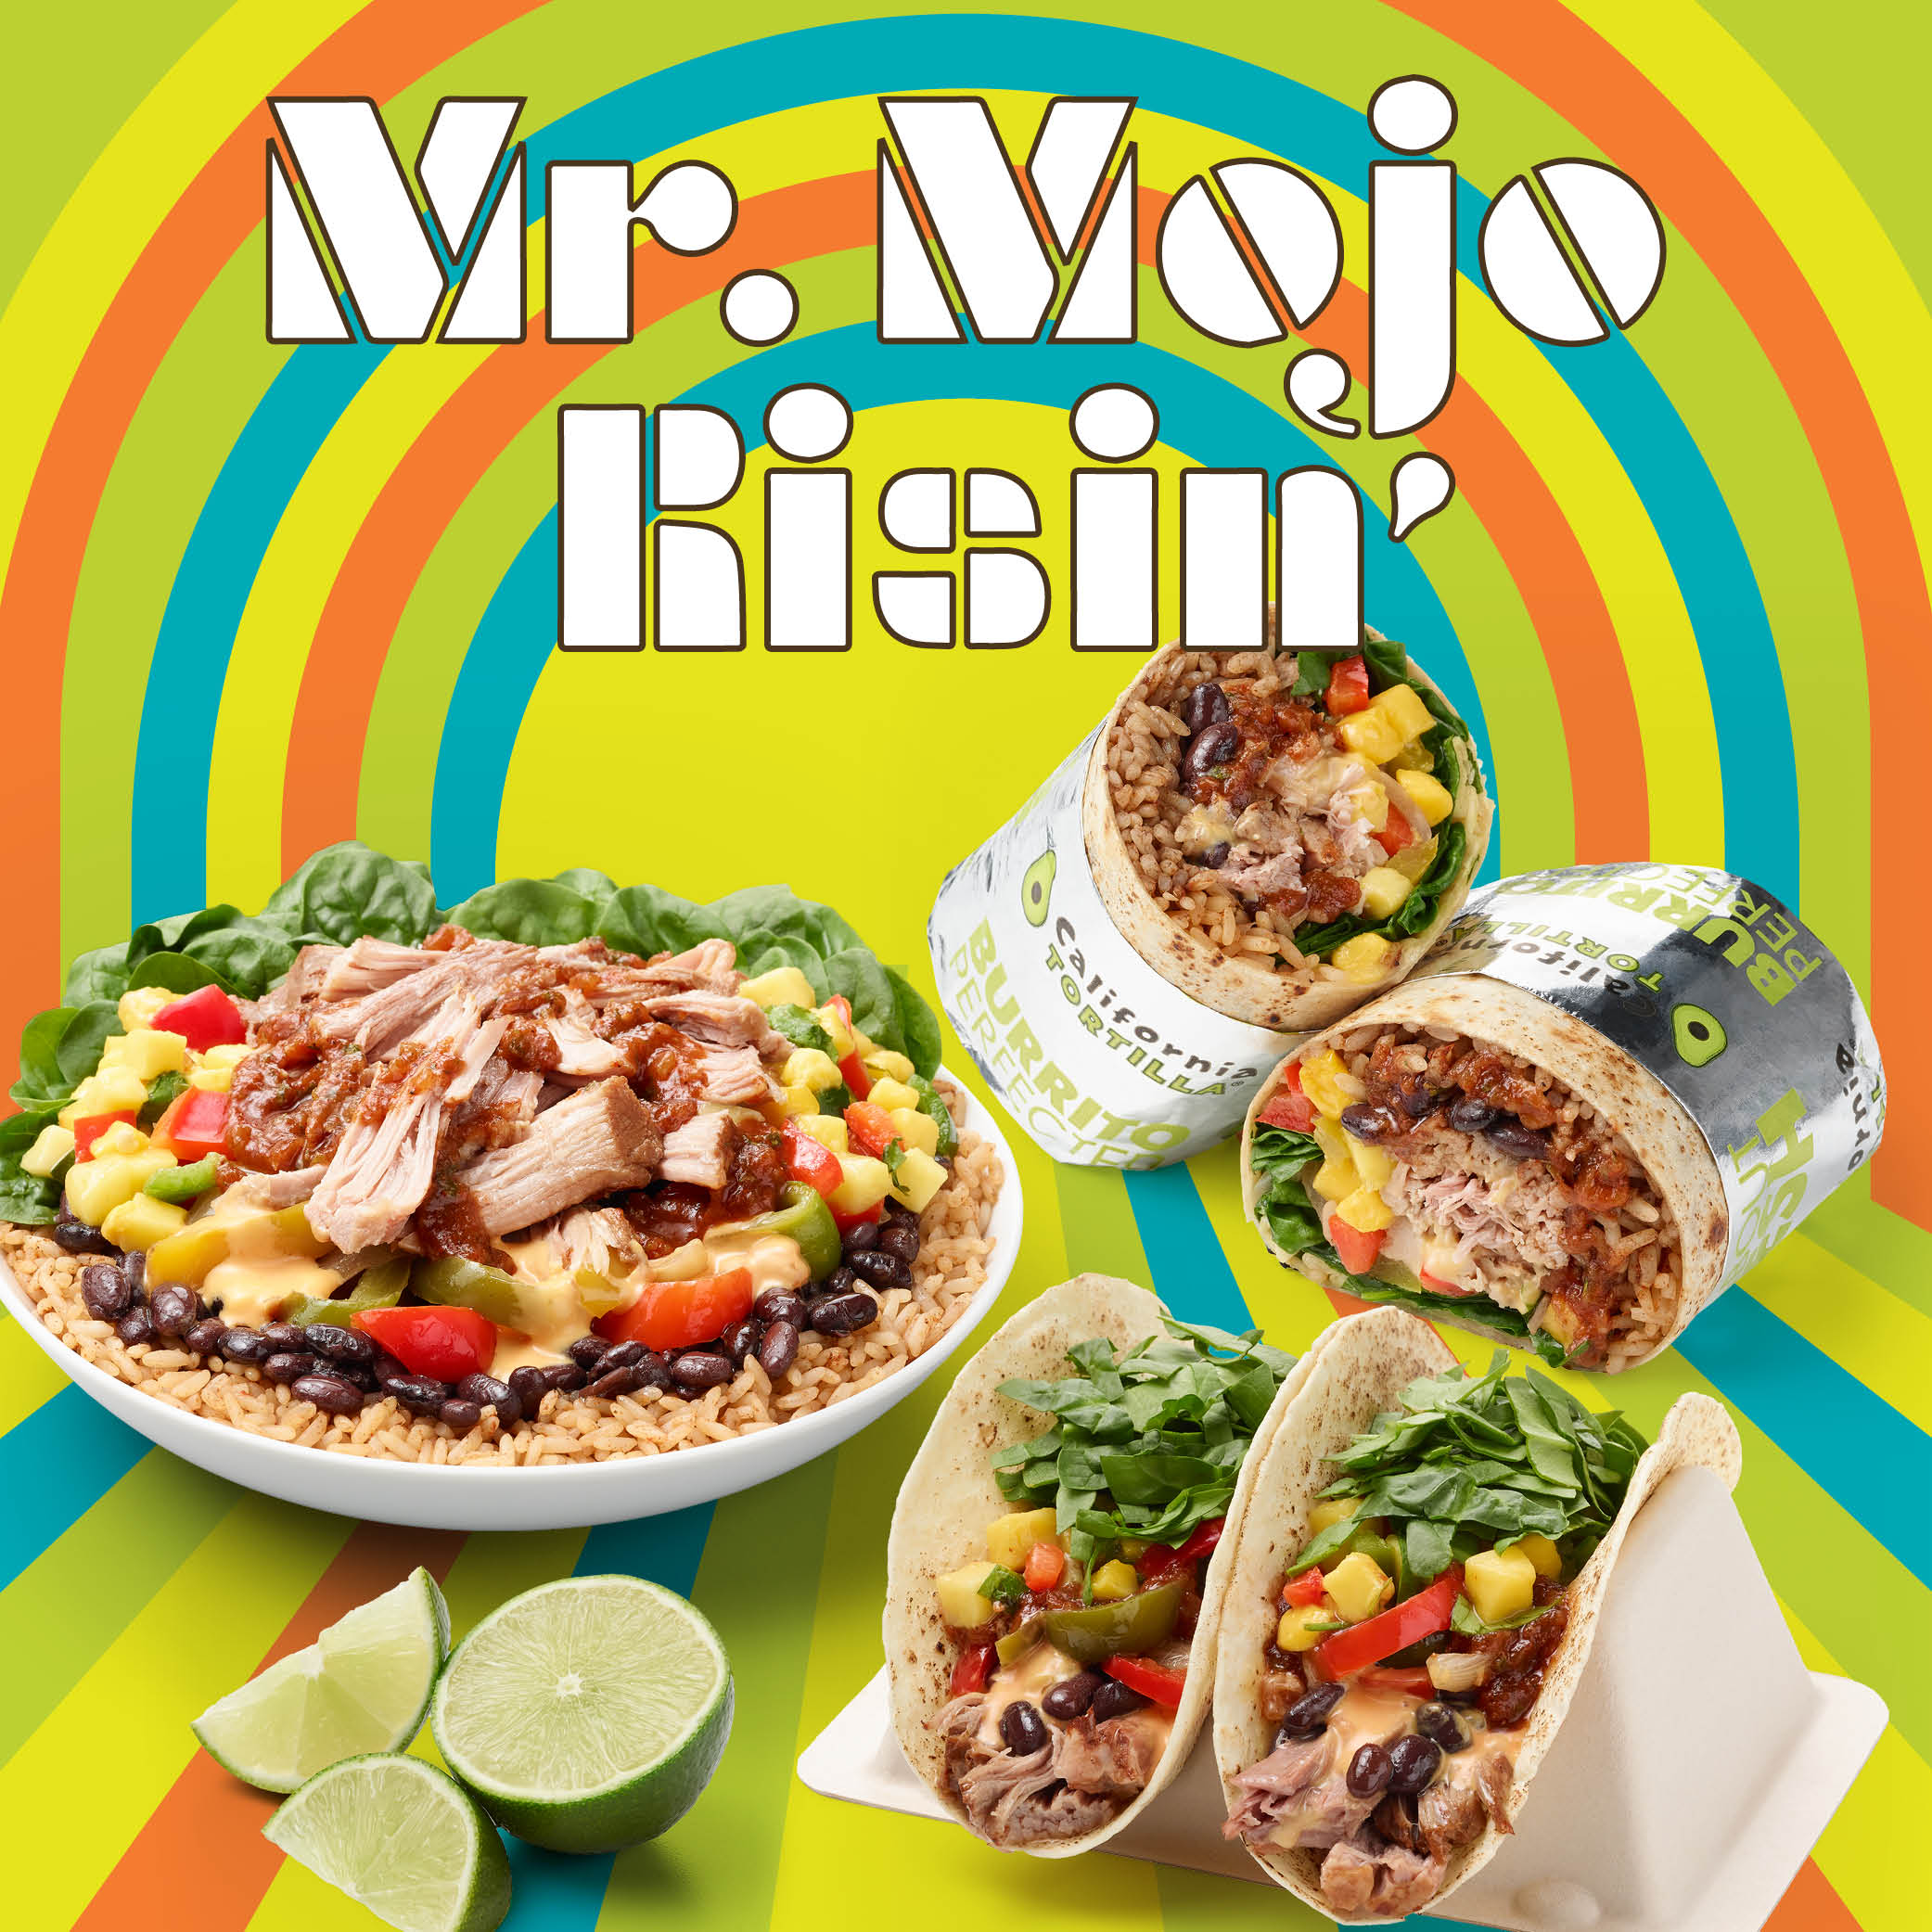 Mr. Mojo Risin' at California Tortilla